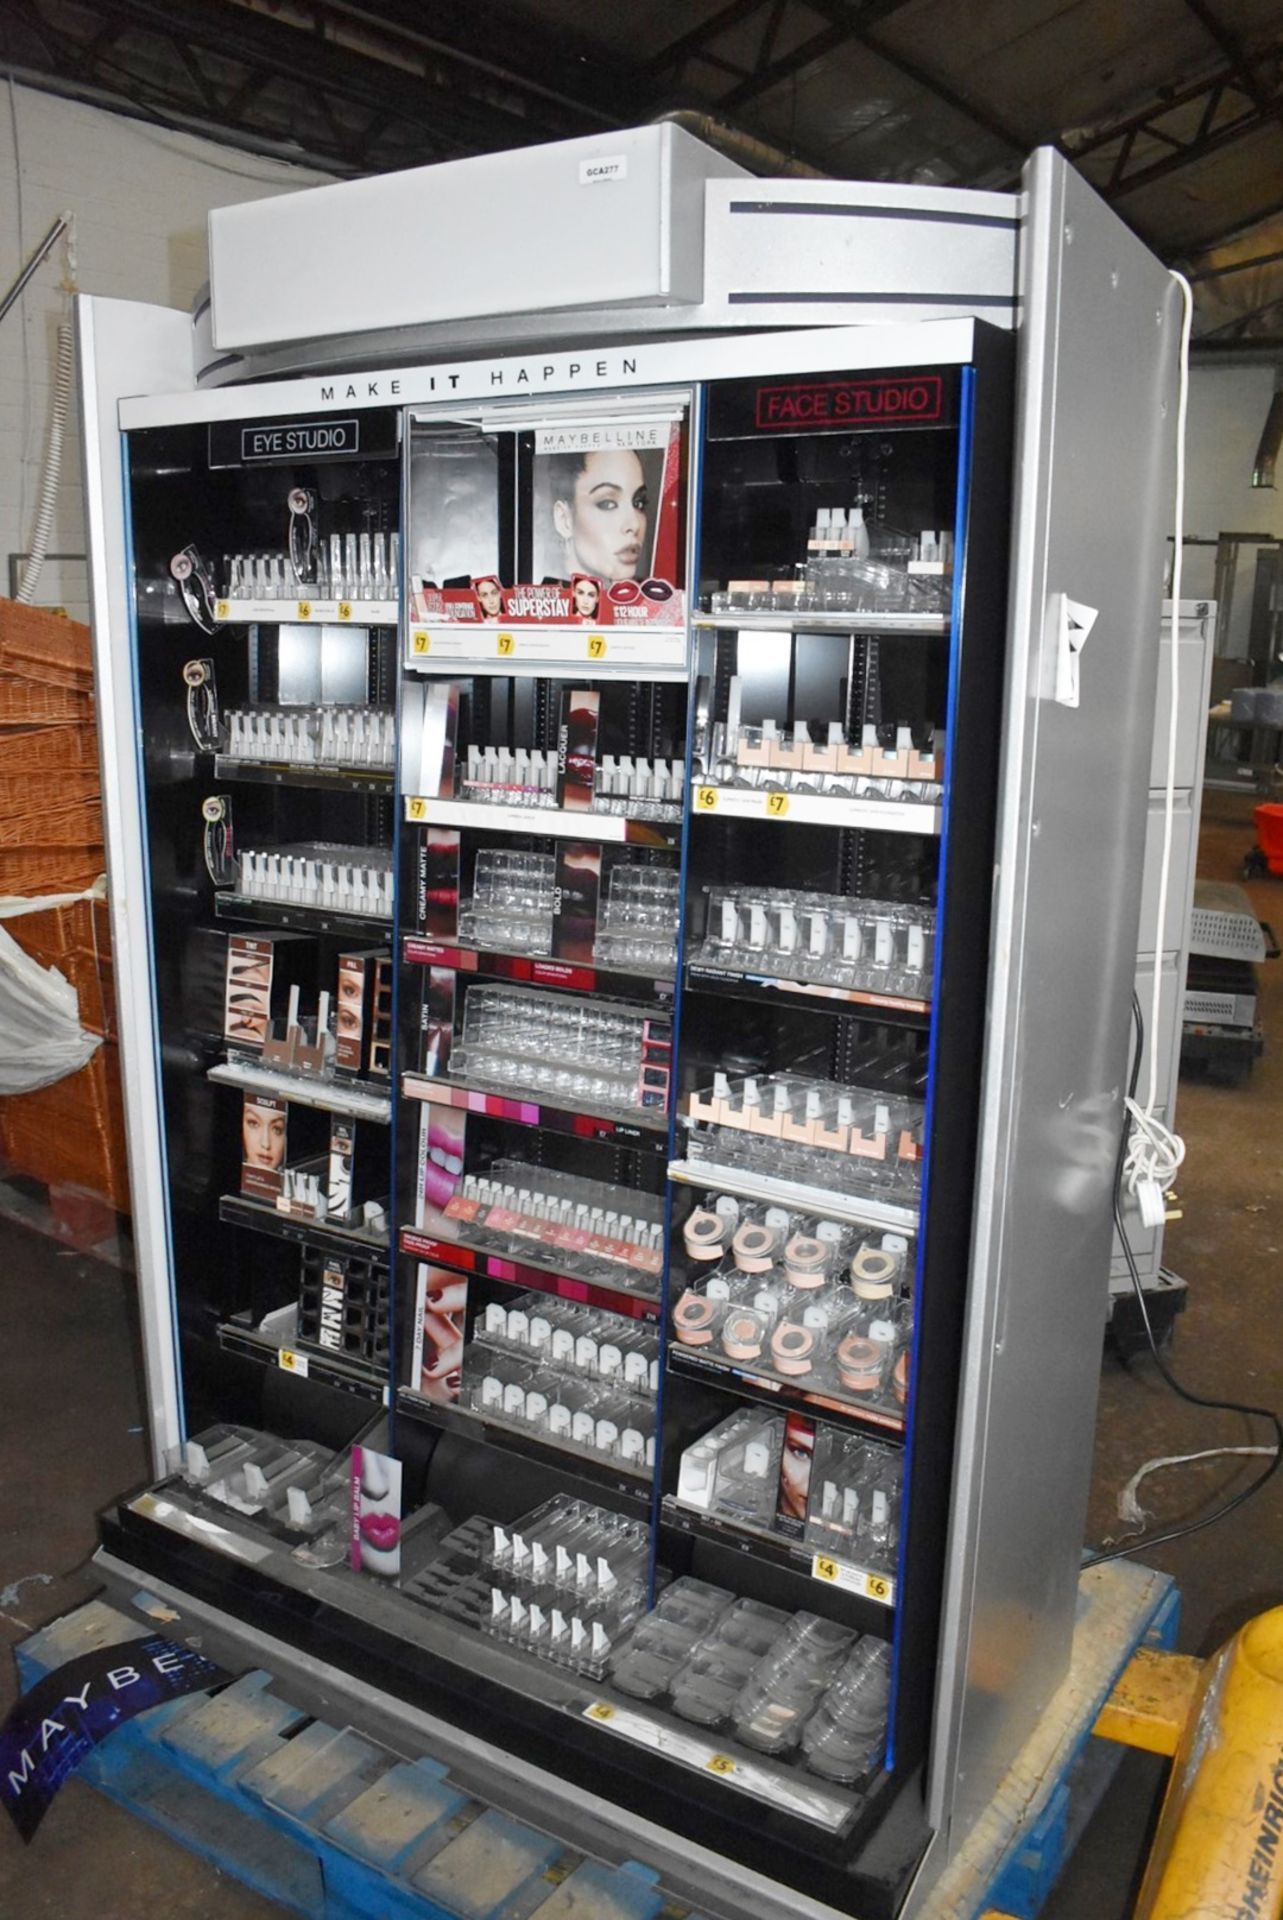 1 x Large Freestanding Make Up & Beauty Illuminated Retail Display Unit - Make it Happen Eye and - Image 7 of 15